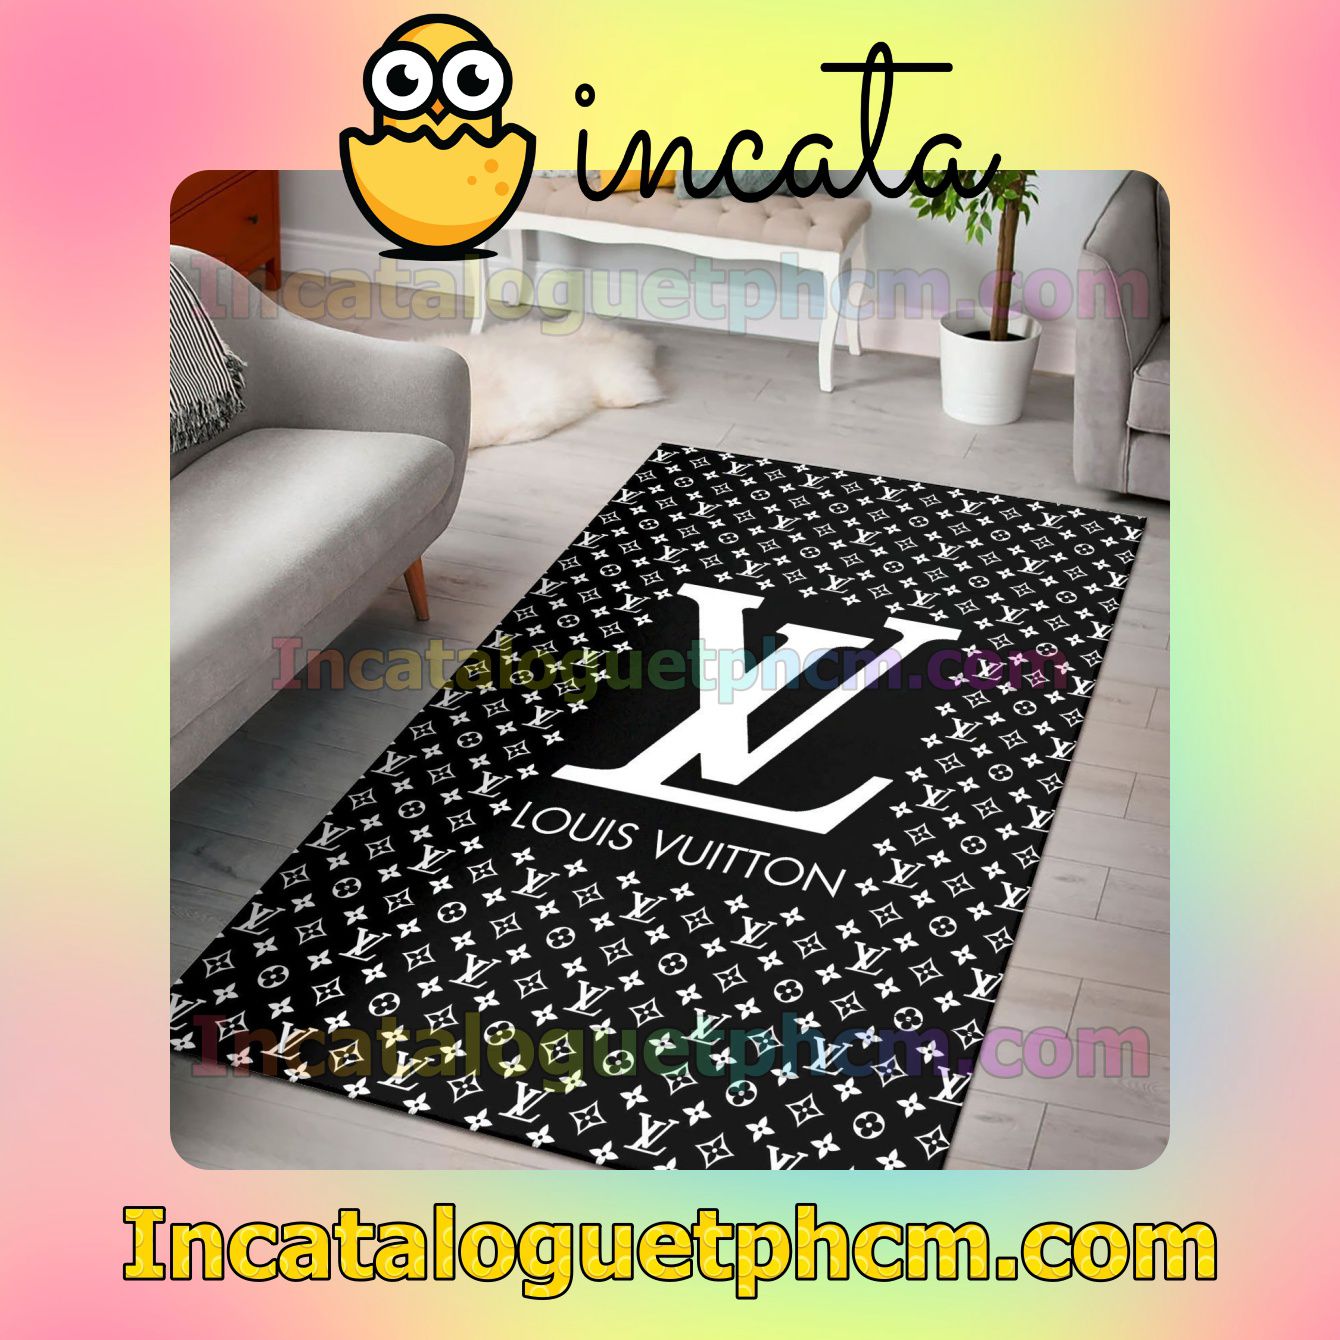 Louis Vuitton Monogram With White Big Logo Center Black Carpet Rugs For Kitchen